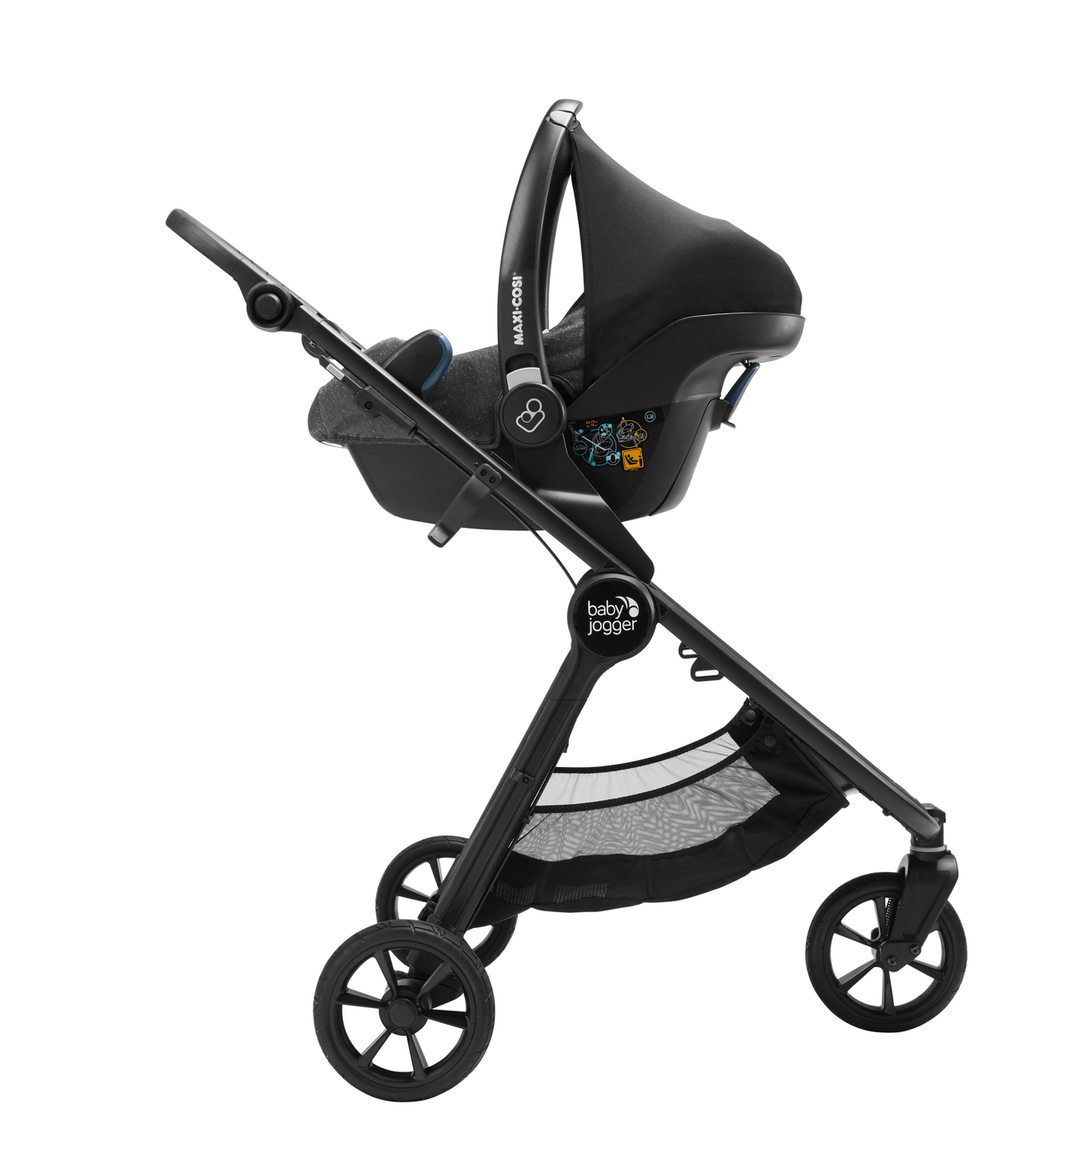 Baby Jogger City Mini pushchair - 3 wheeler & all terrains - Pushchairs